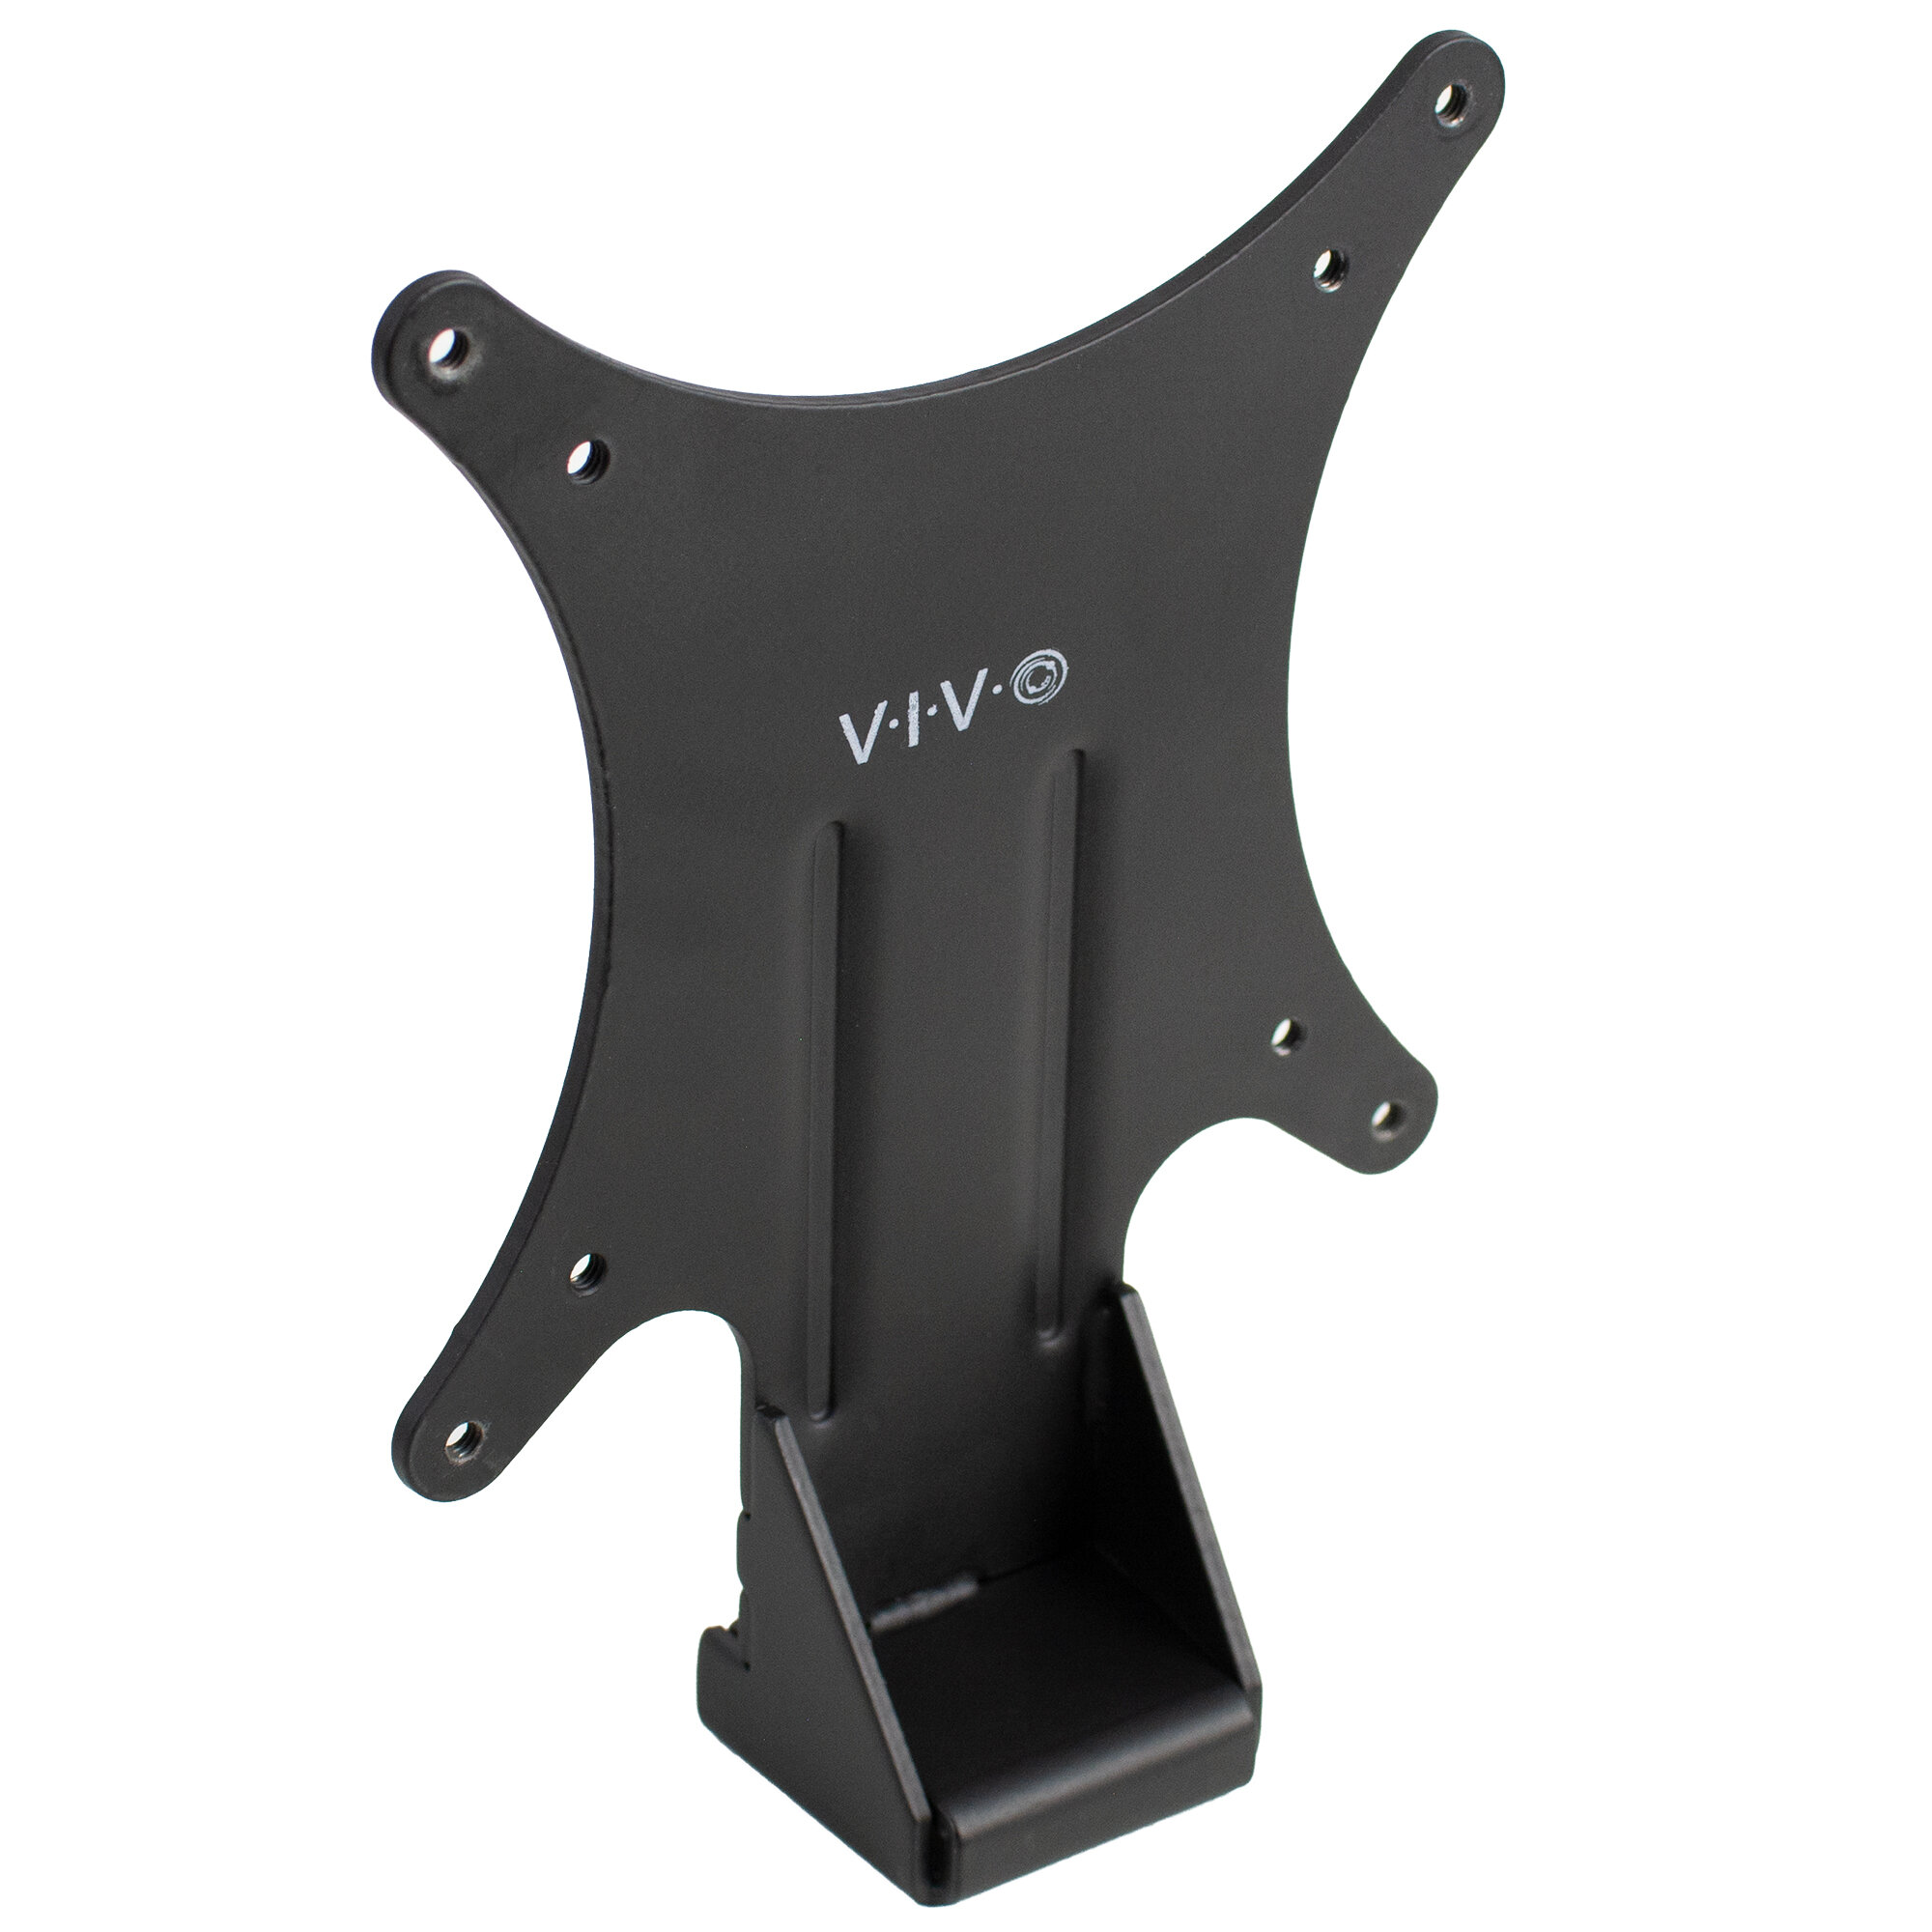 Whole Set VESA Adapter Mount Bracket Kit for Non-VESA HP ACER